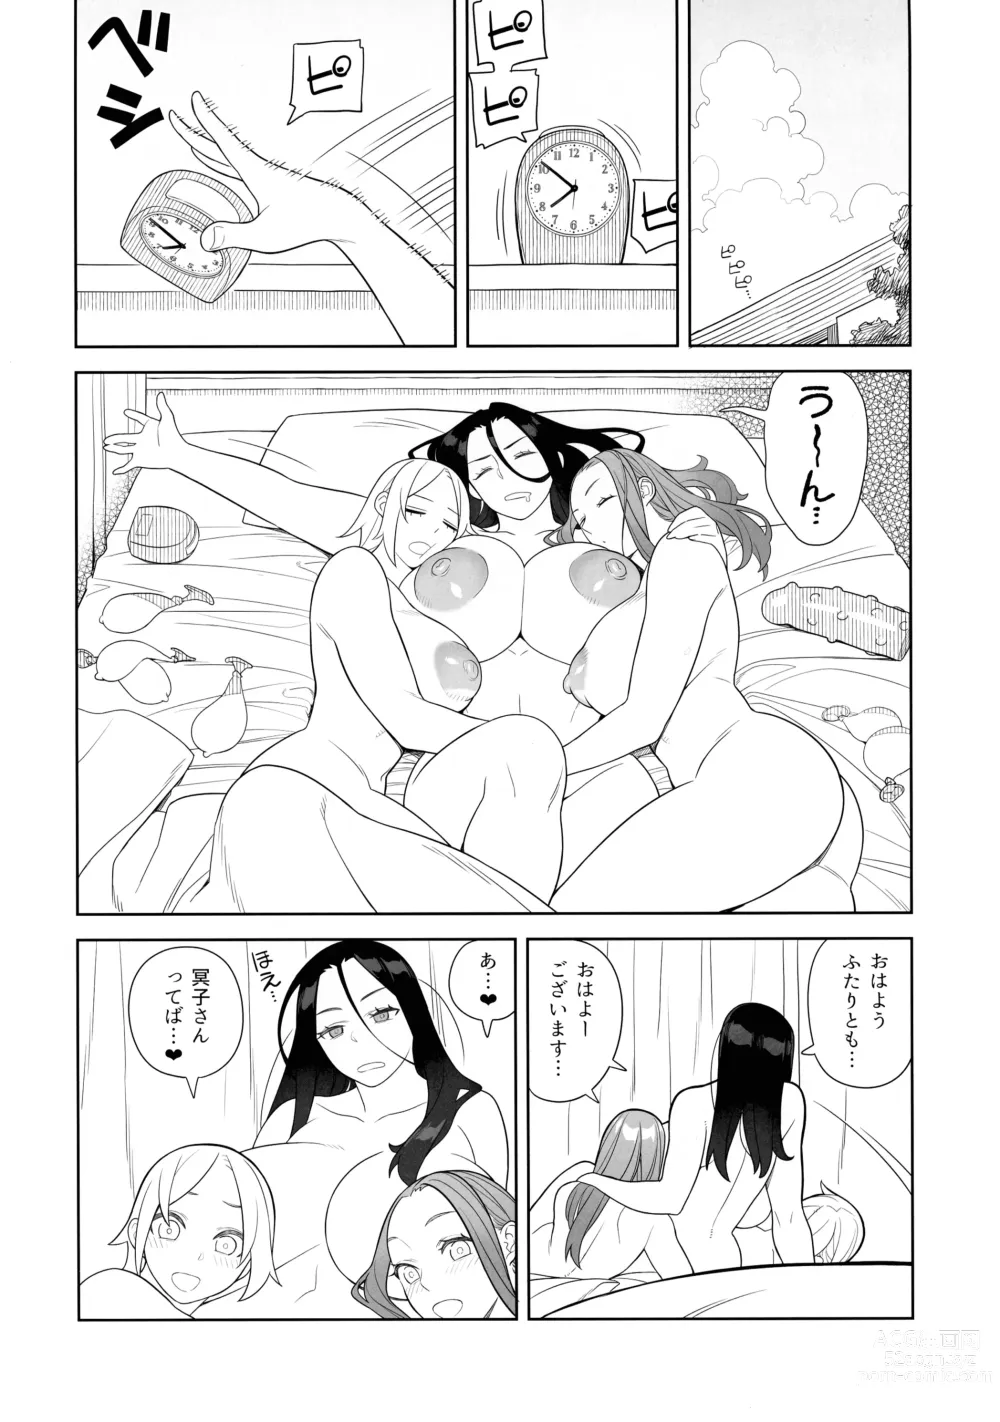 Page 5 of doujinshi Bakunyuu Vacation